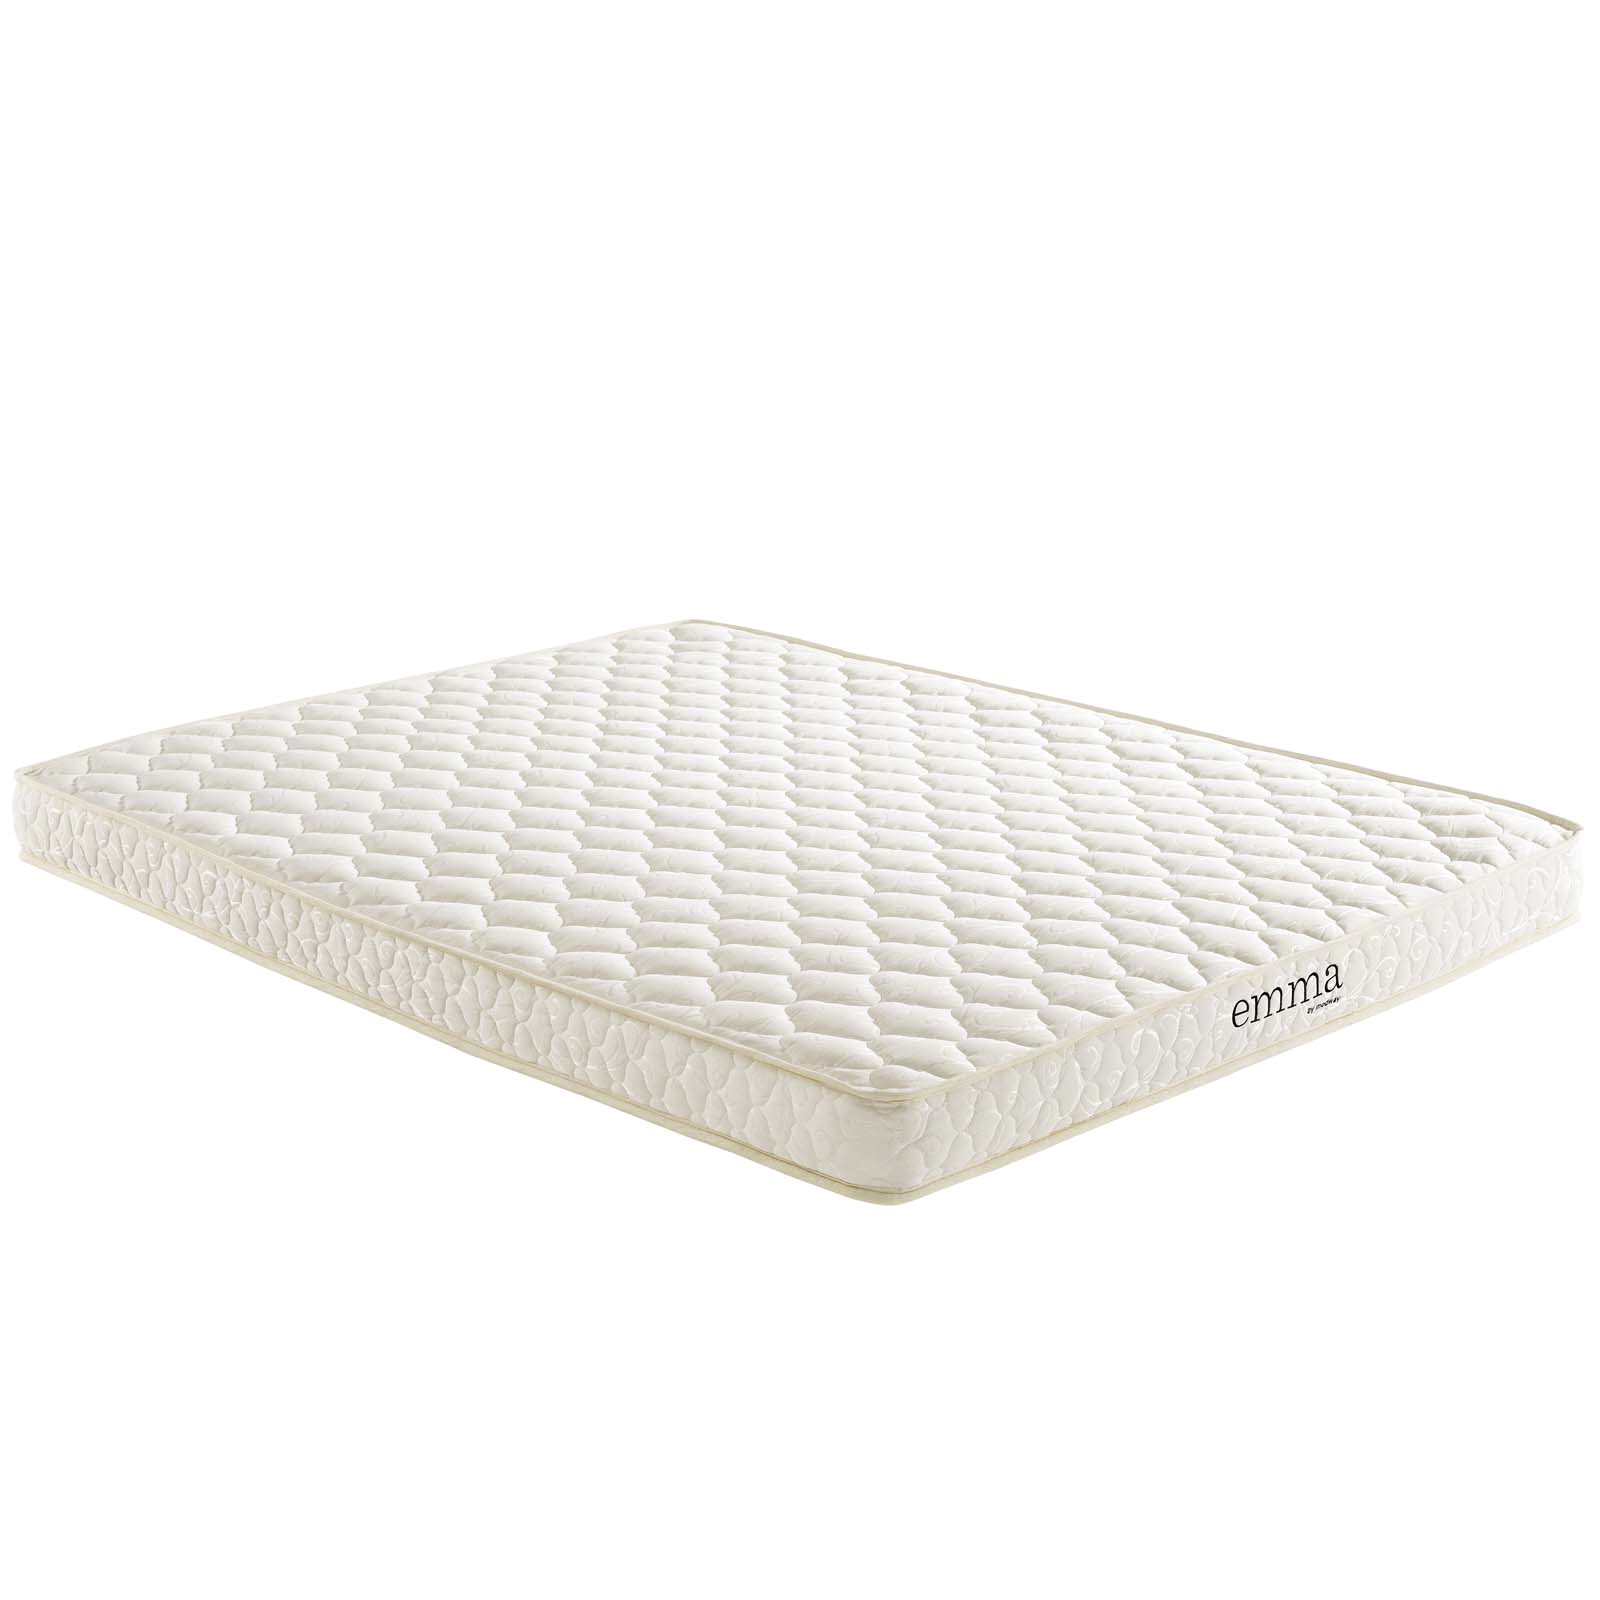 modway emma 6 two layer memory foam mattress multiple sizes walmart com